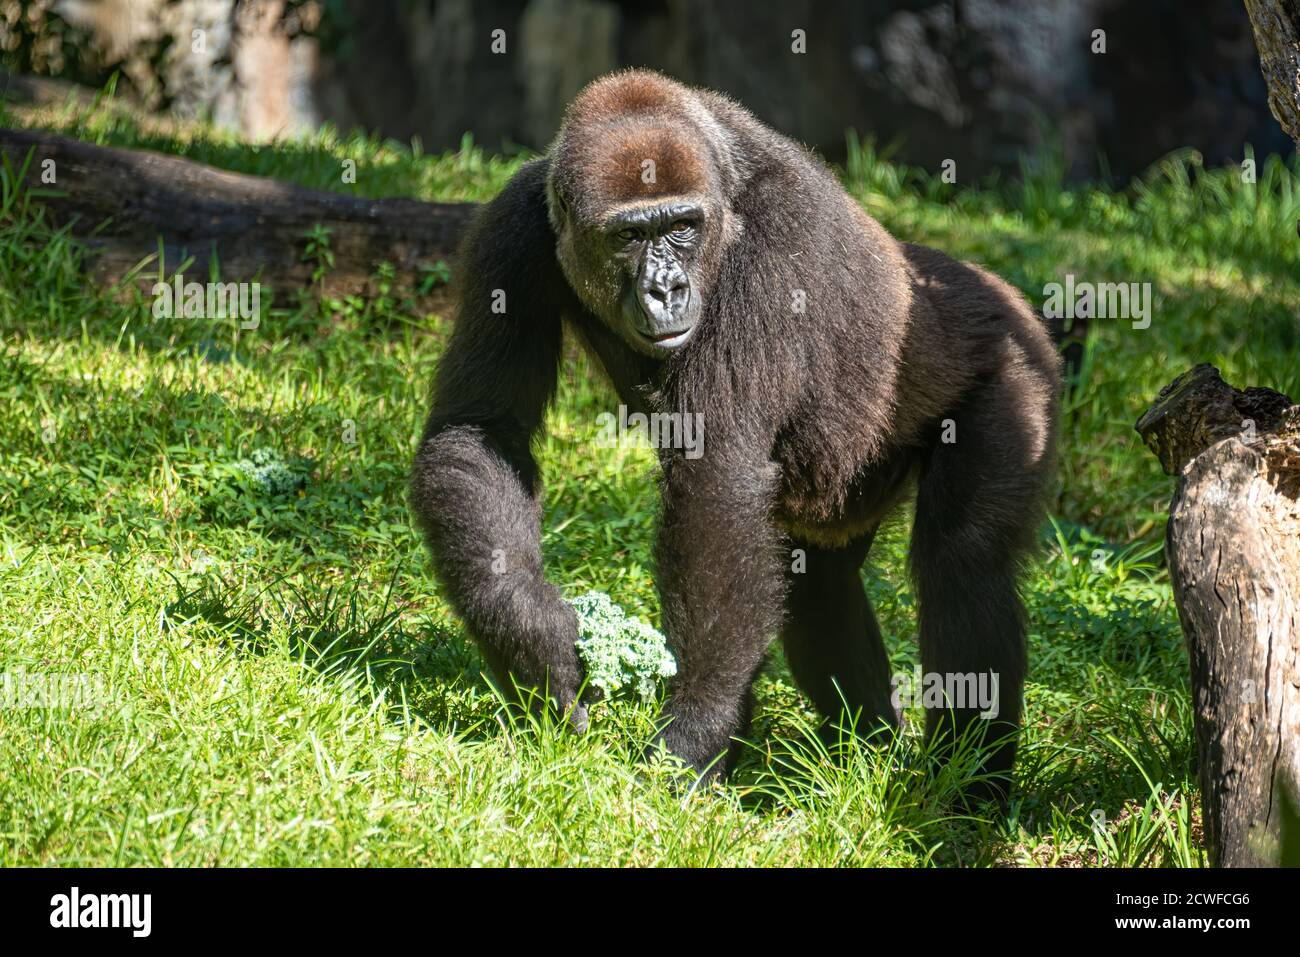 Western lowland gorilla at Busch Gardens Tampa Bay in Tampa, Florida. (USA) Stock Photo